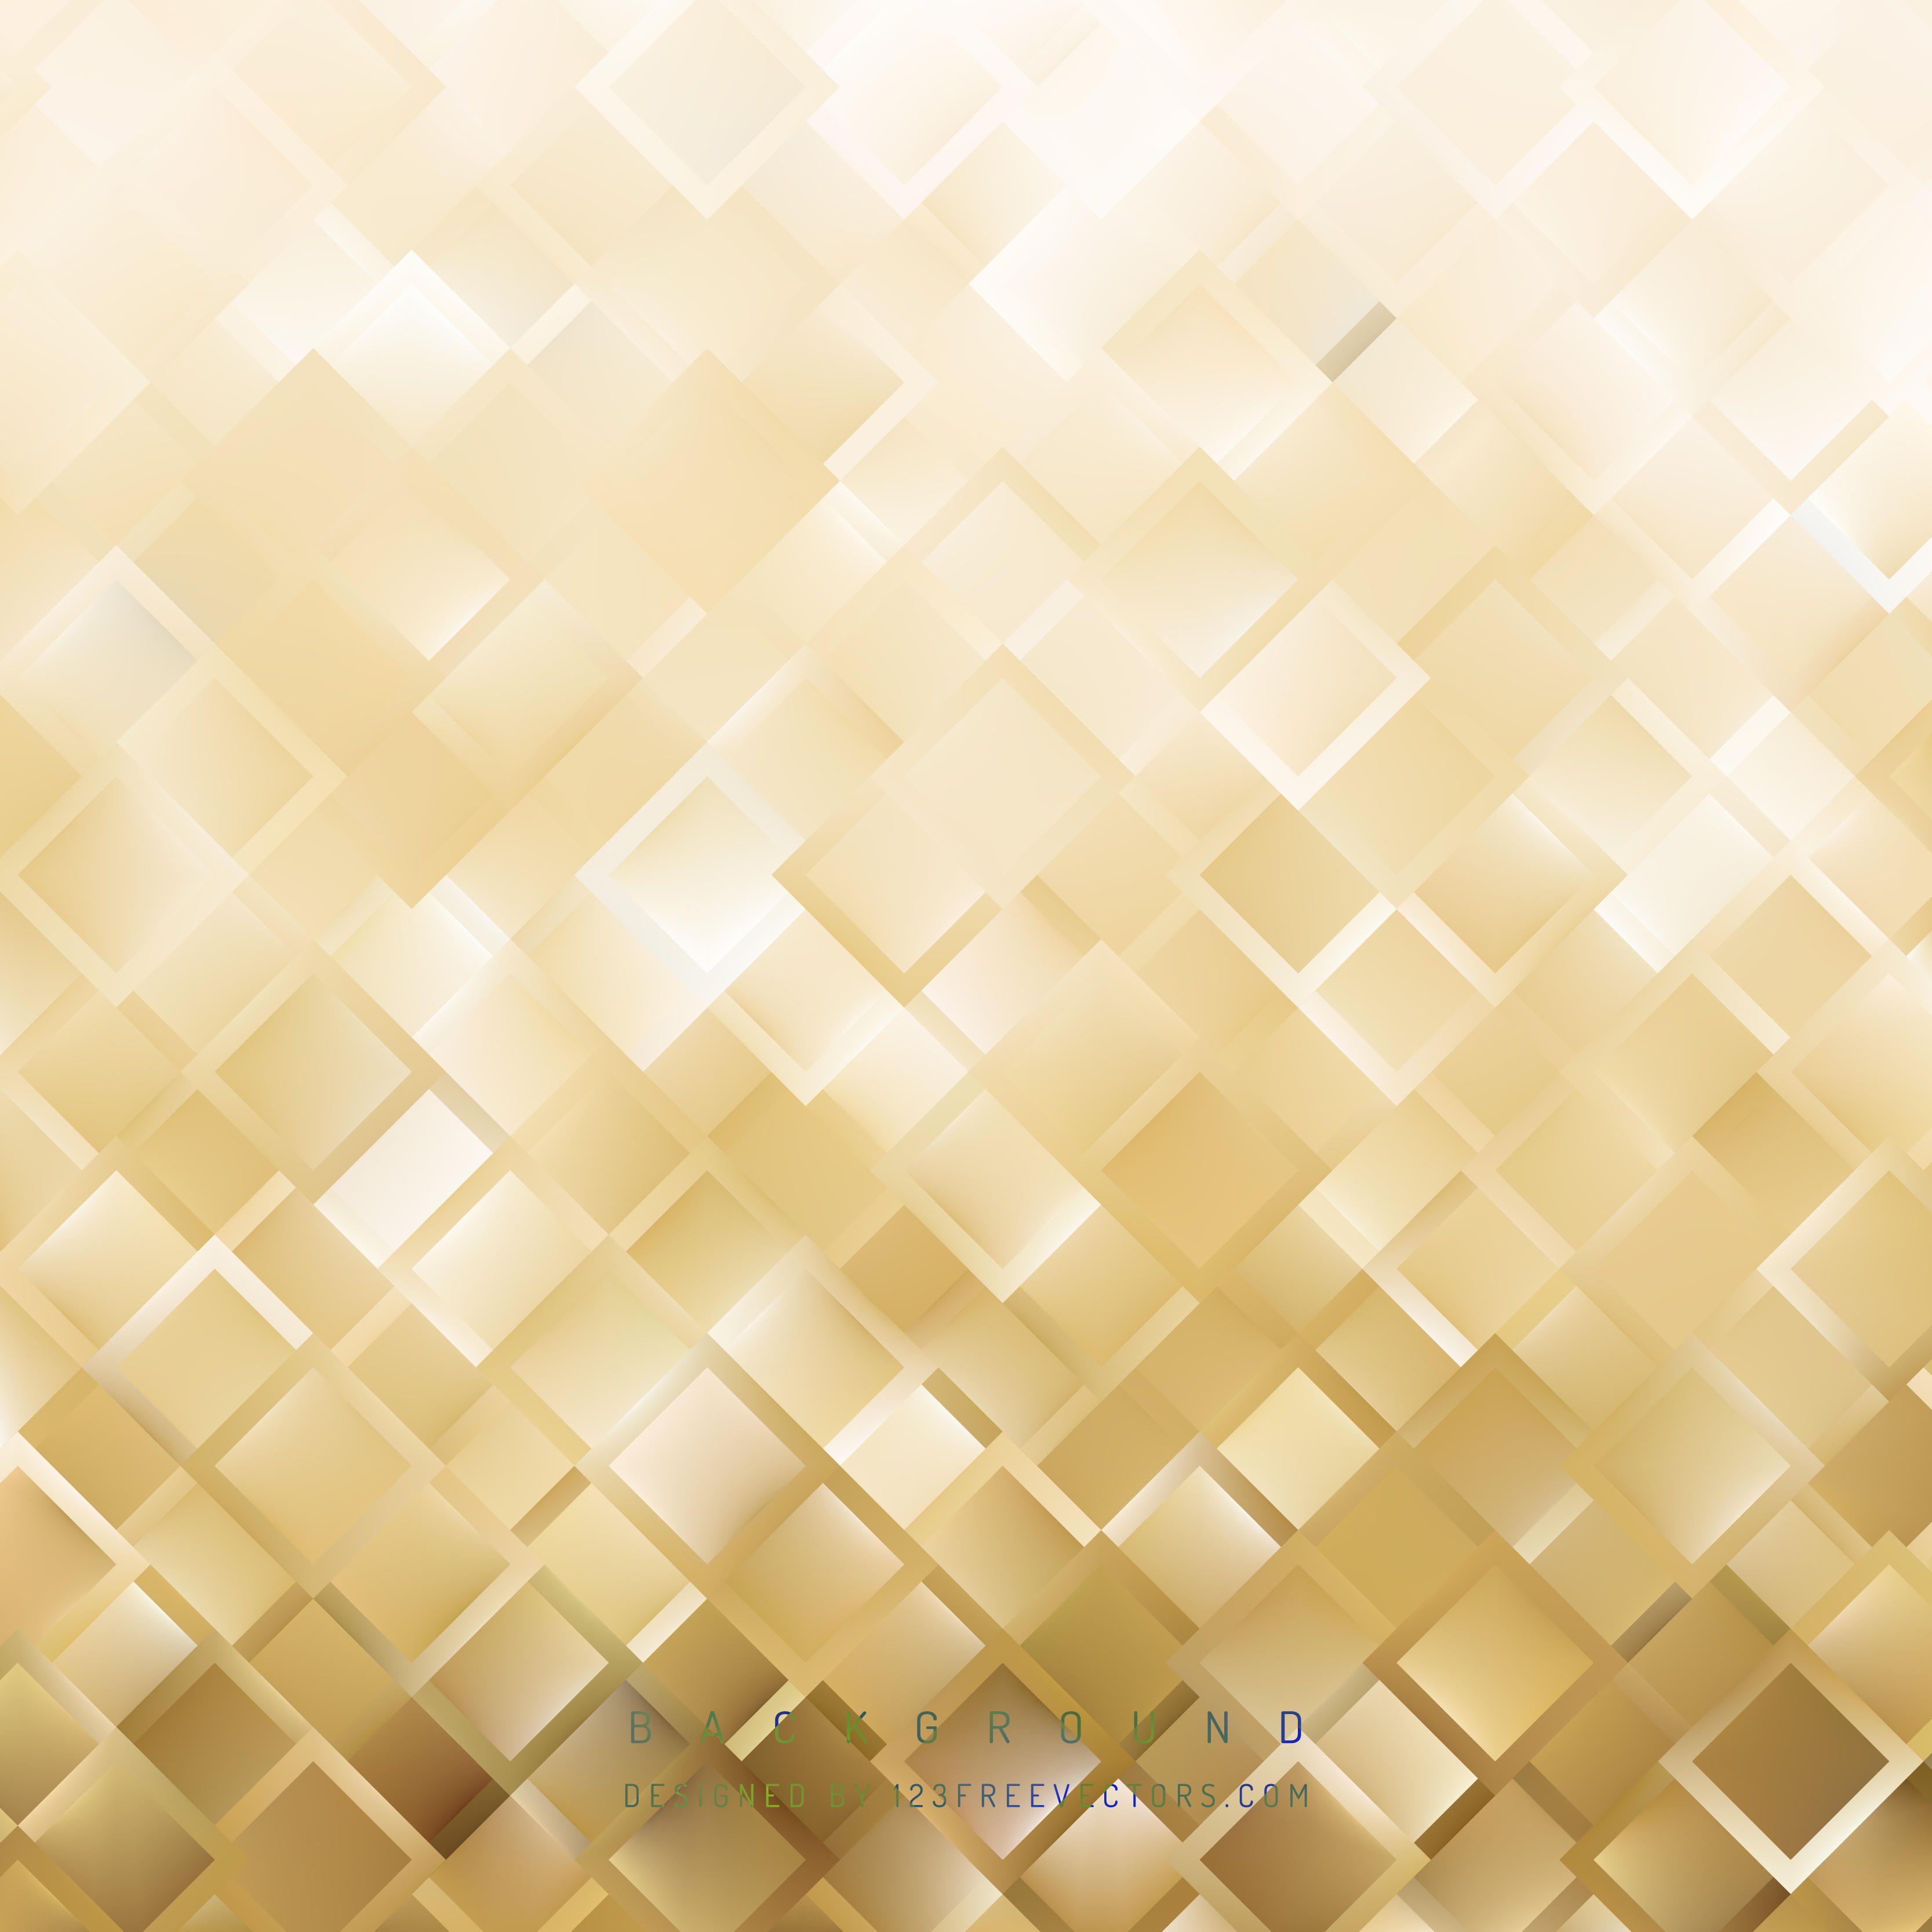 Light Gold Square Background PatternFreevectors